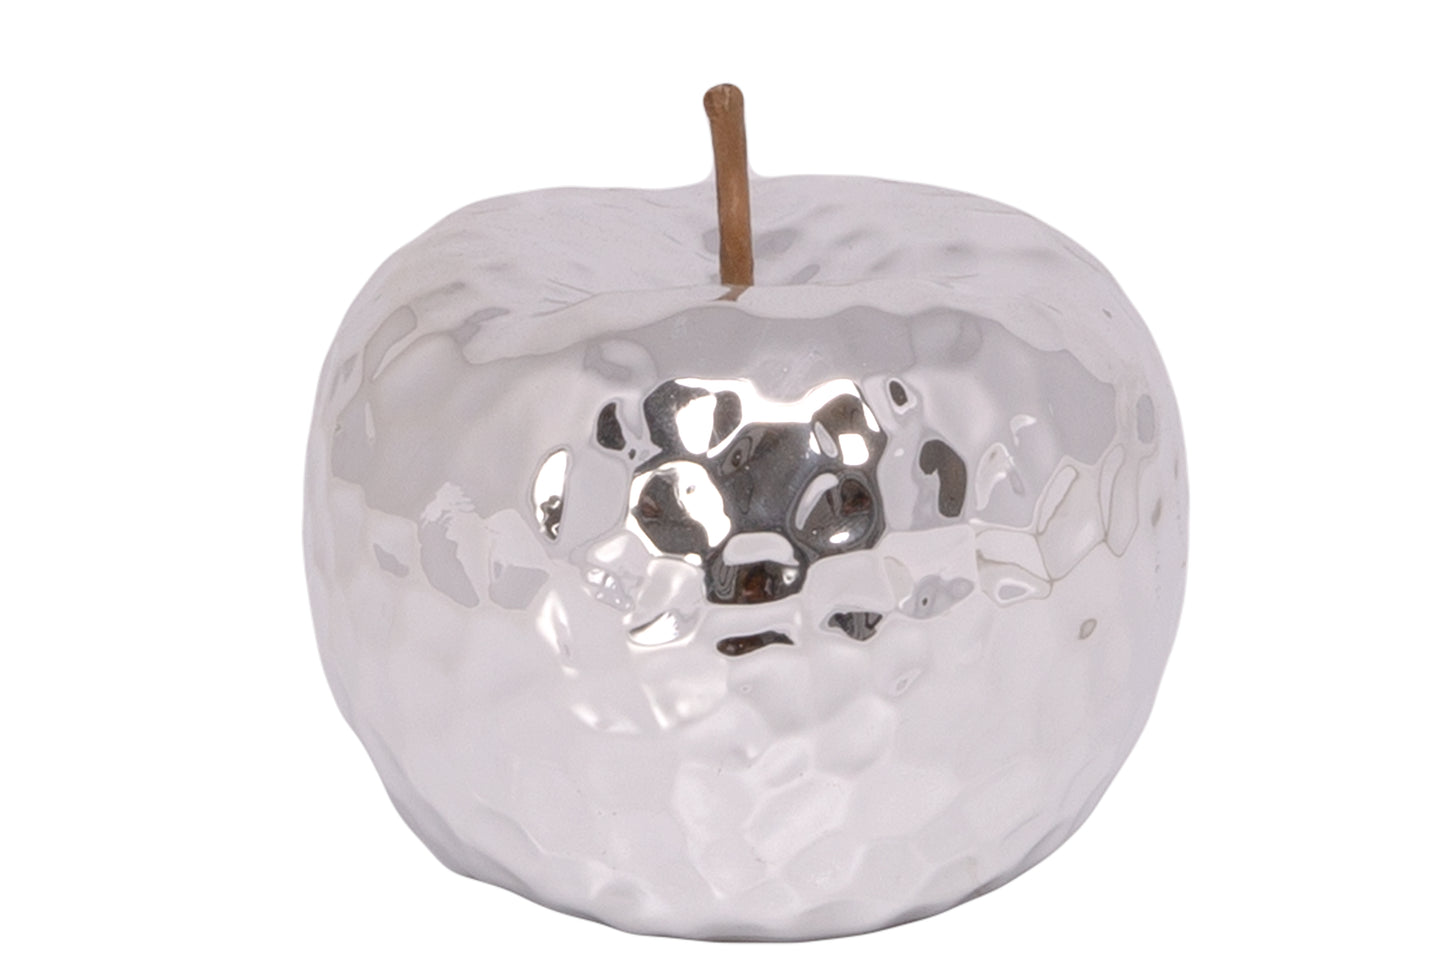 Ceramic Apple Figurine SM Polished Chrome Finish Silver-4.75"H